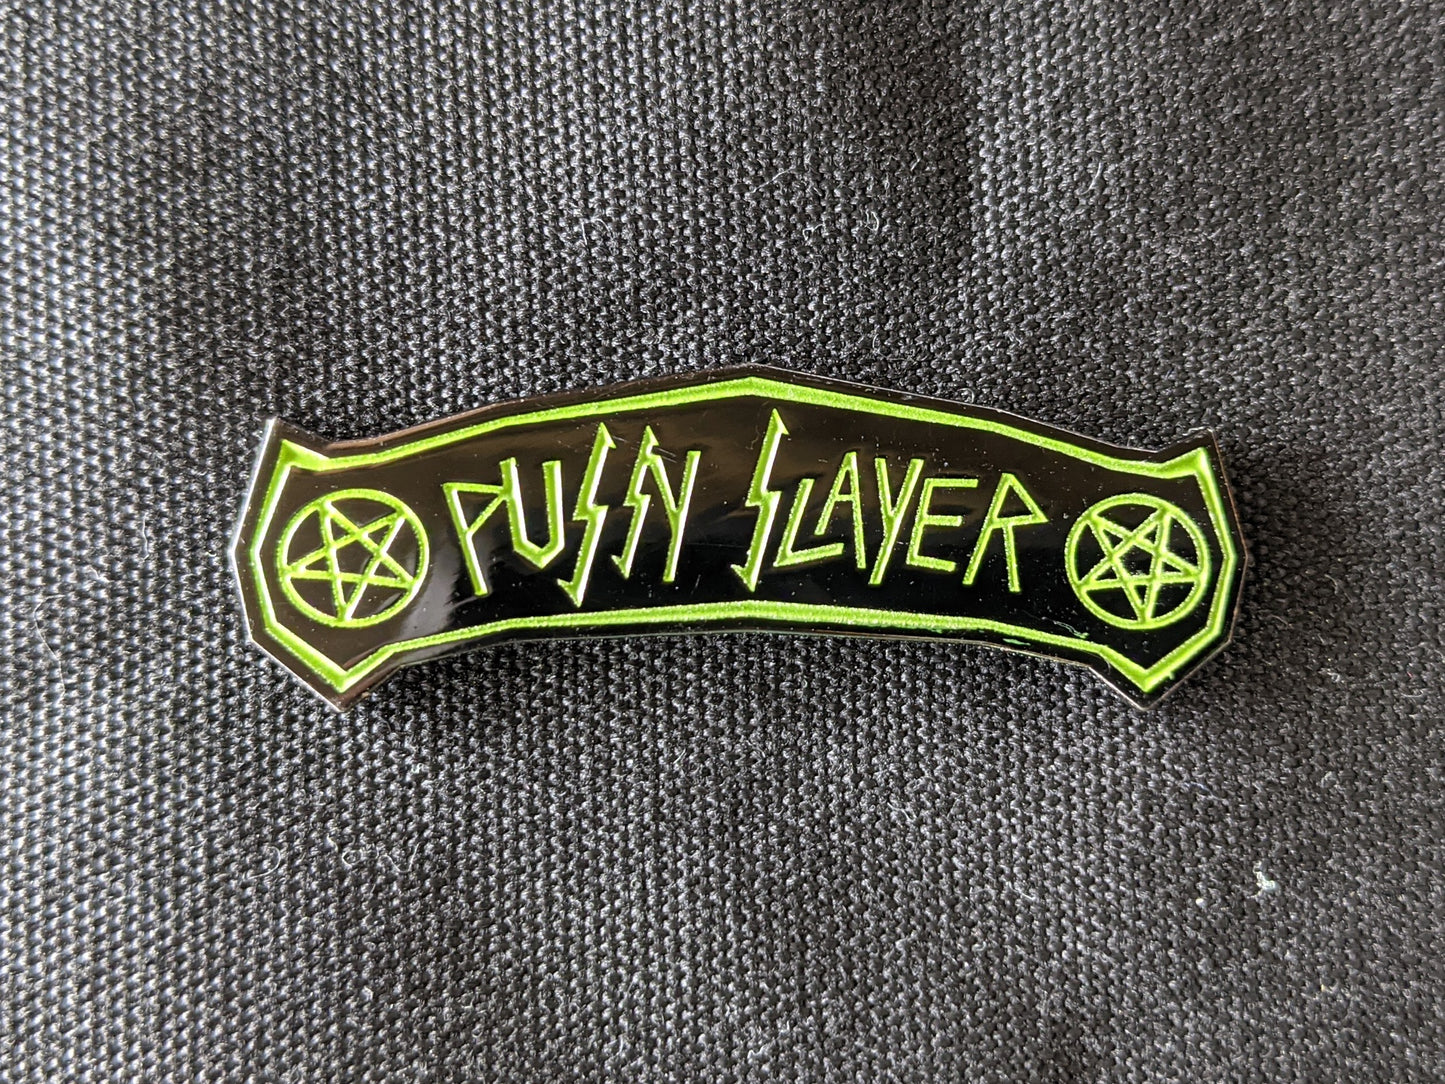 Pussy Slayer enamel pin